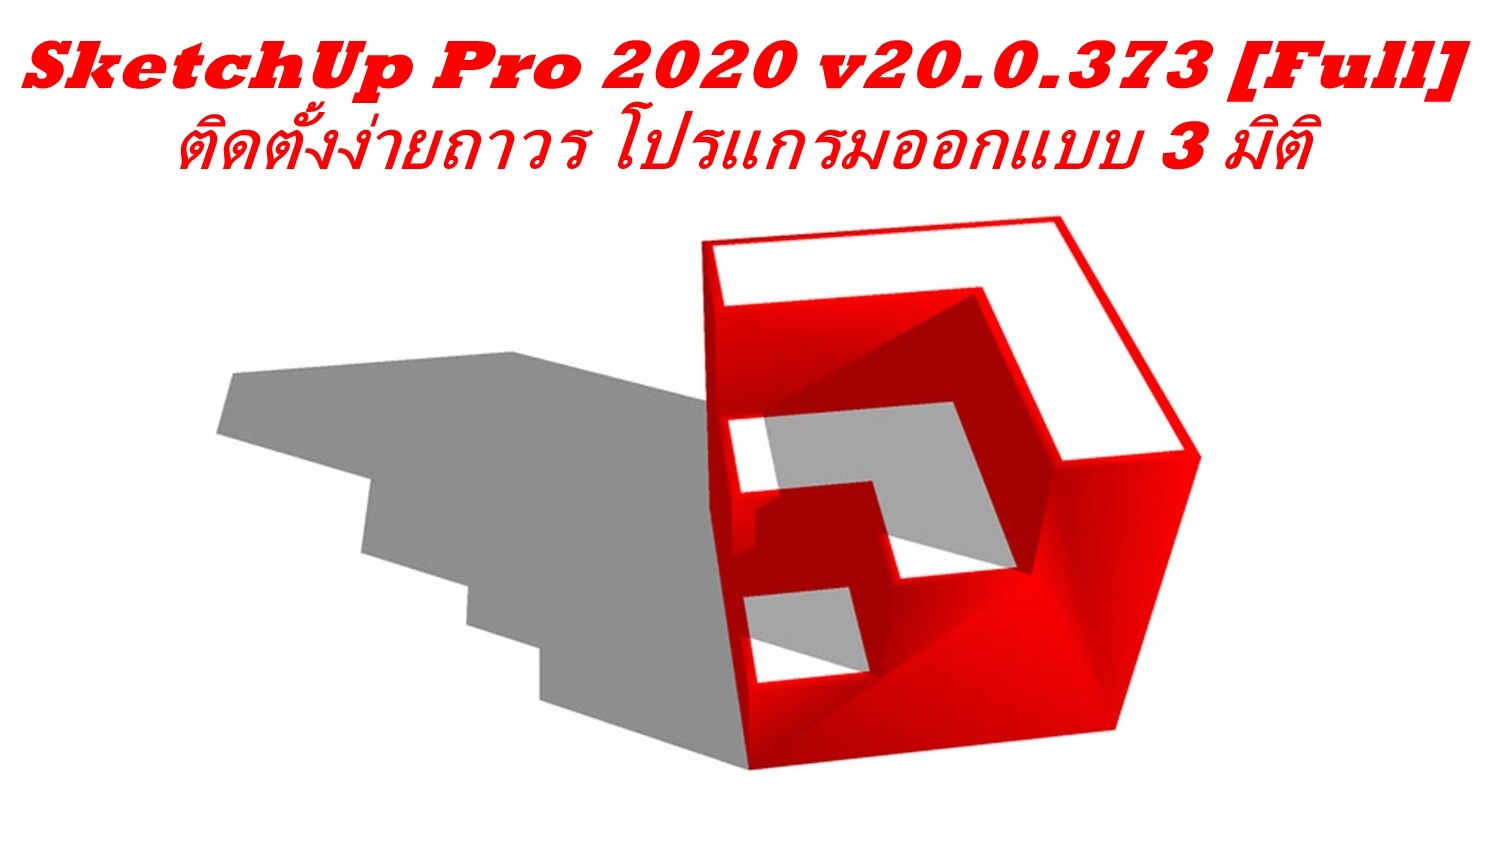 SketchUp Pro 2020 v20.0.373 [Full] ติดตั้งง่าย ถาวร โปรแกรมออกแบบ 3 มิติ